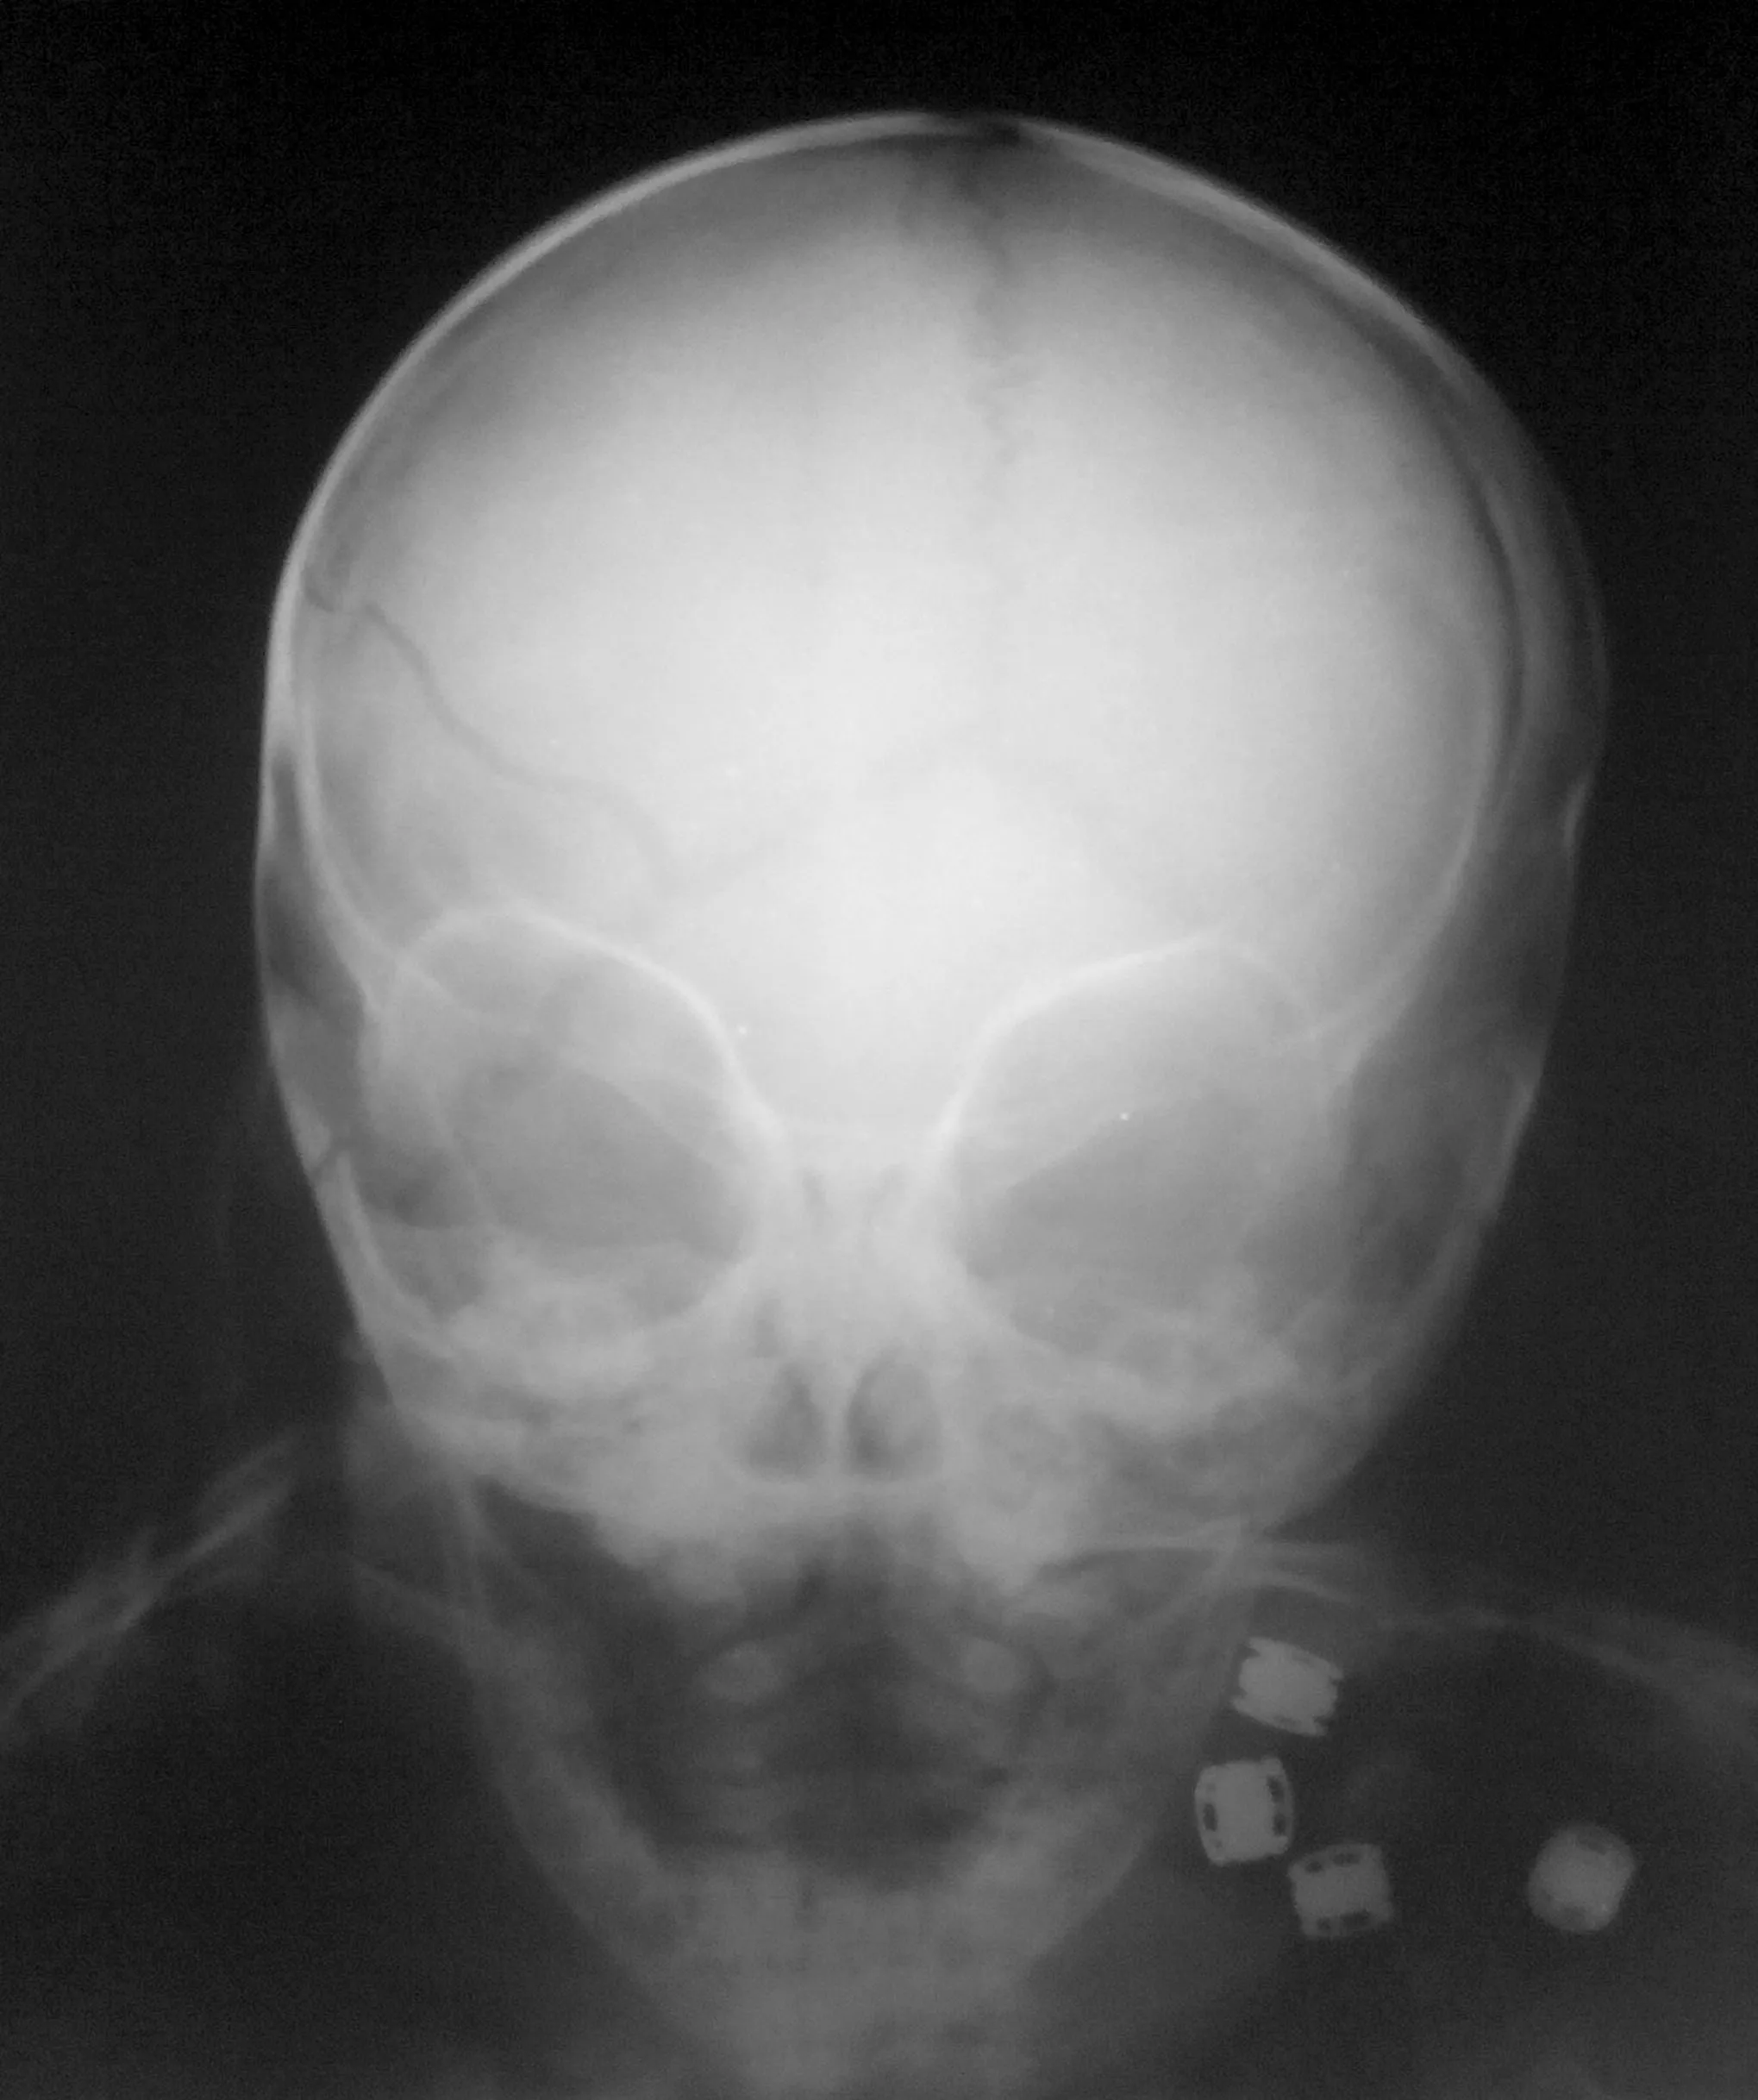 Детский череп рентген. Рентгенограмма черепа ребенка. Снимок черепа с пояснениями.